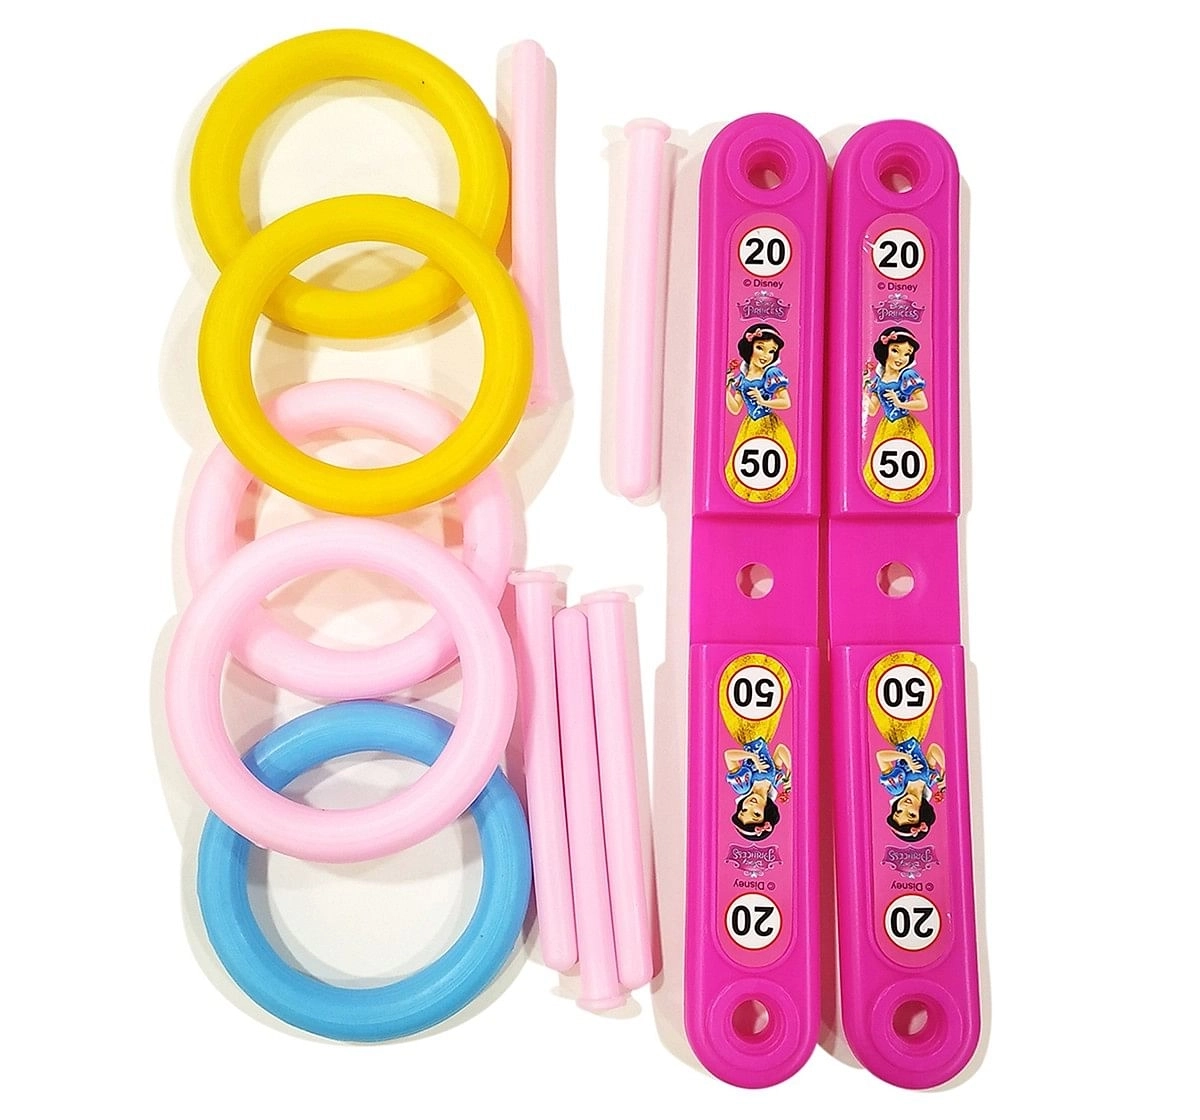 IToys Disney Princess Ringtoss game for kids,  3Y+(Multicolour)